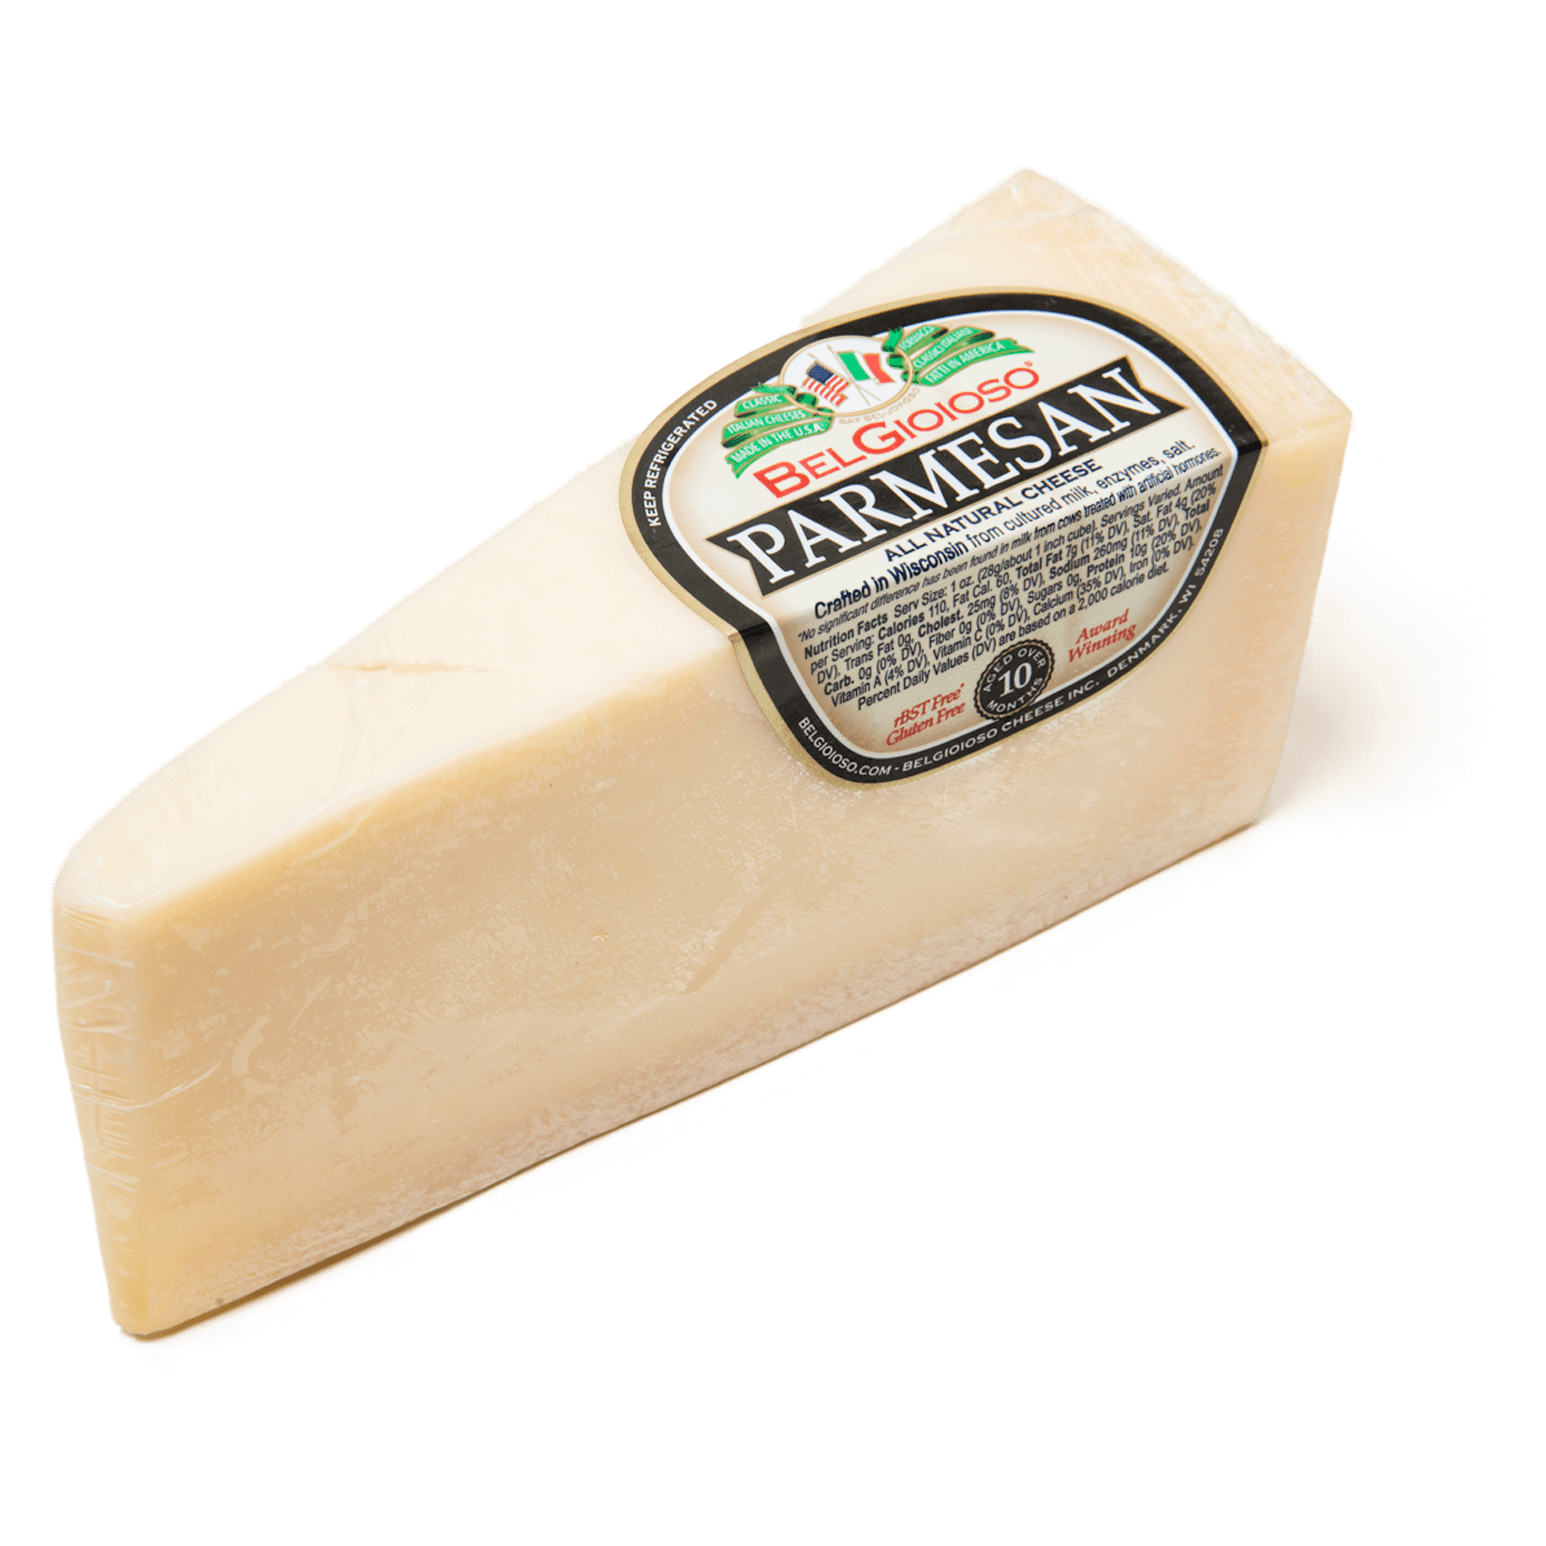 https://res.cloudinary.com/hksqkdlah/image/upload/30333_sil-supermarket-parmesan-cheese-belgiogioso-parmesan-cheese.png